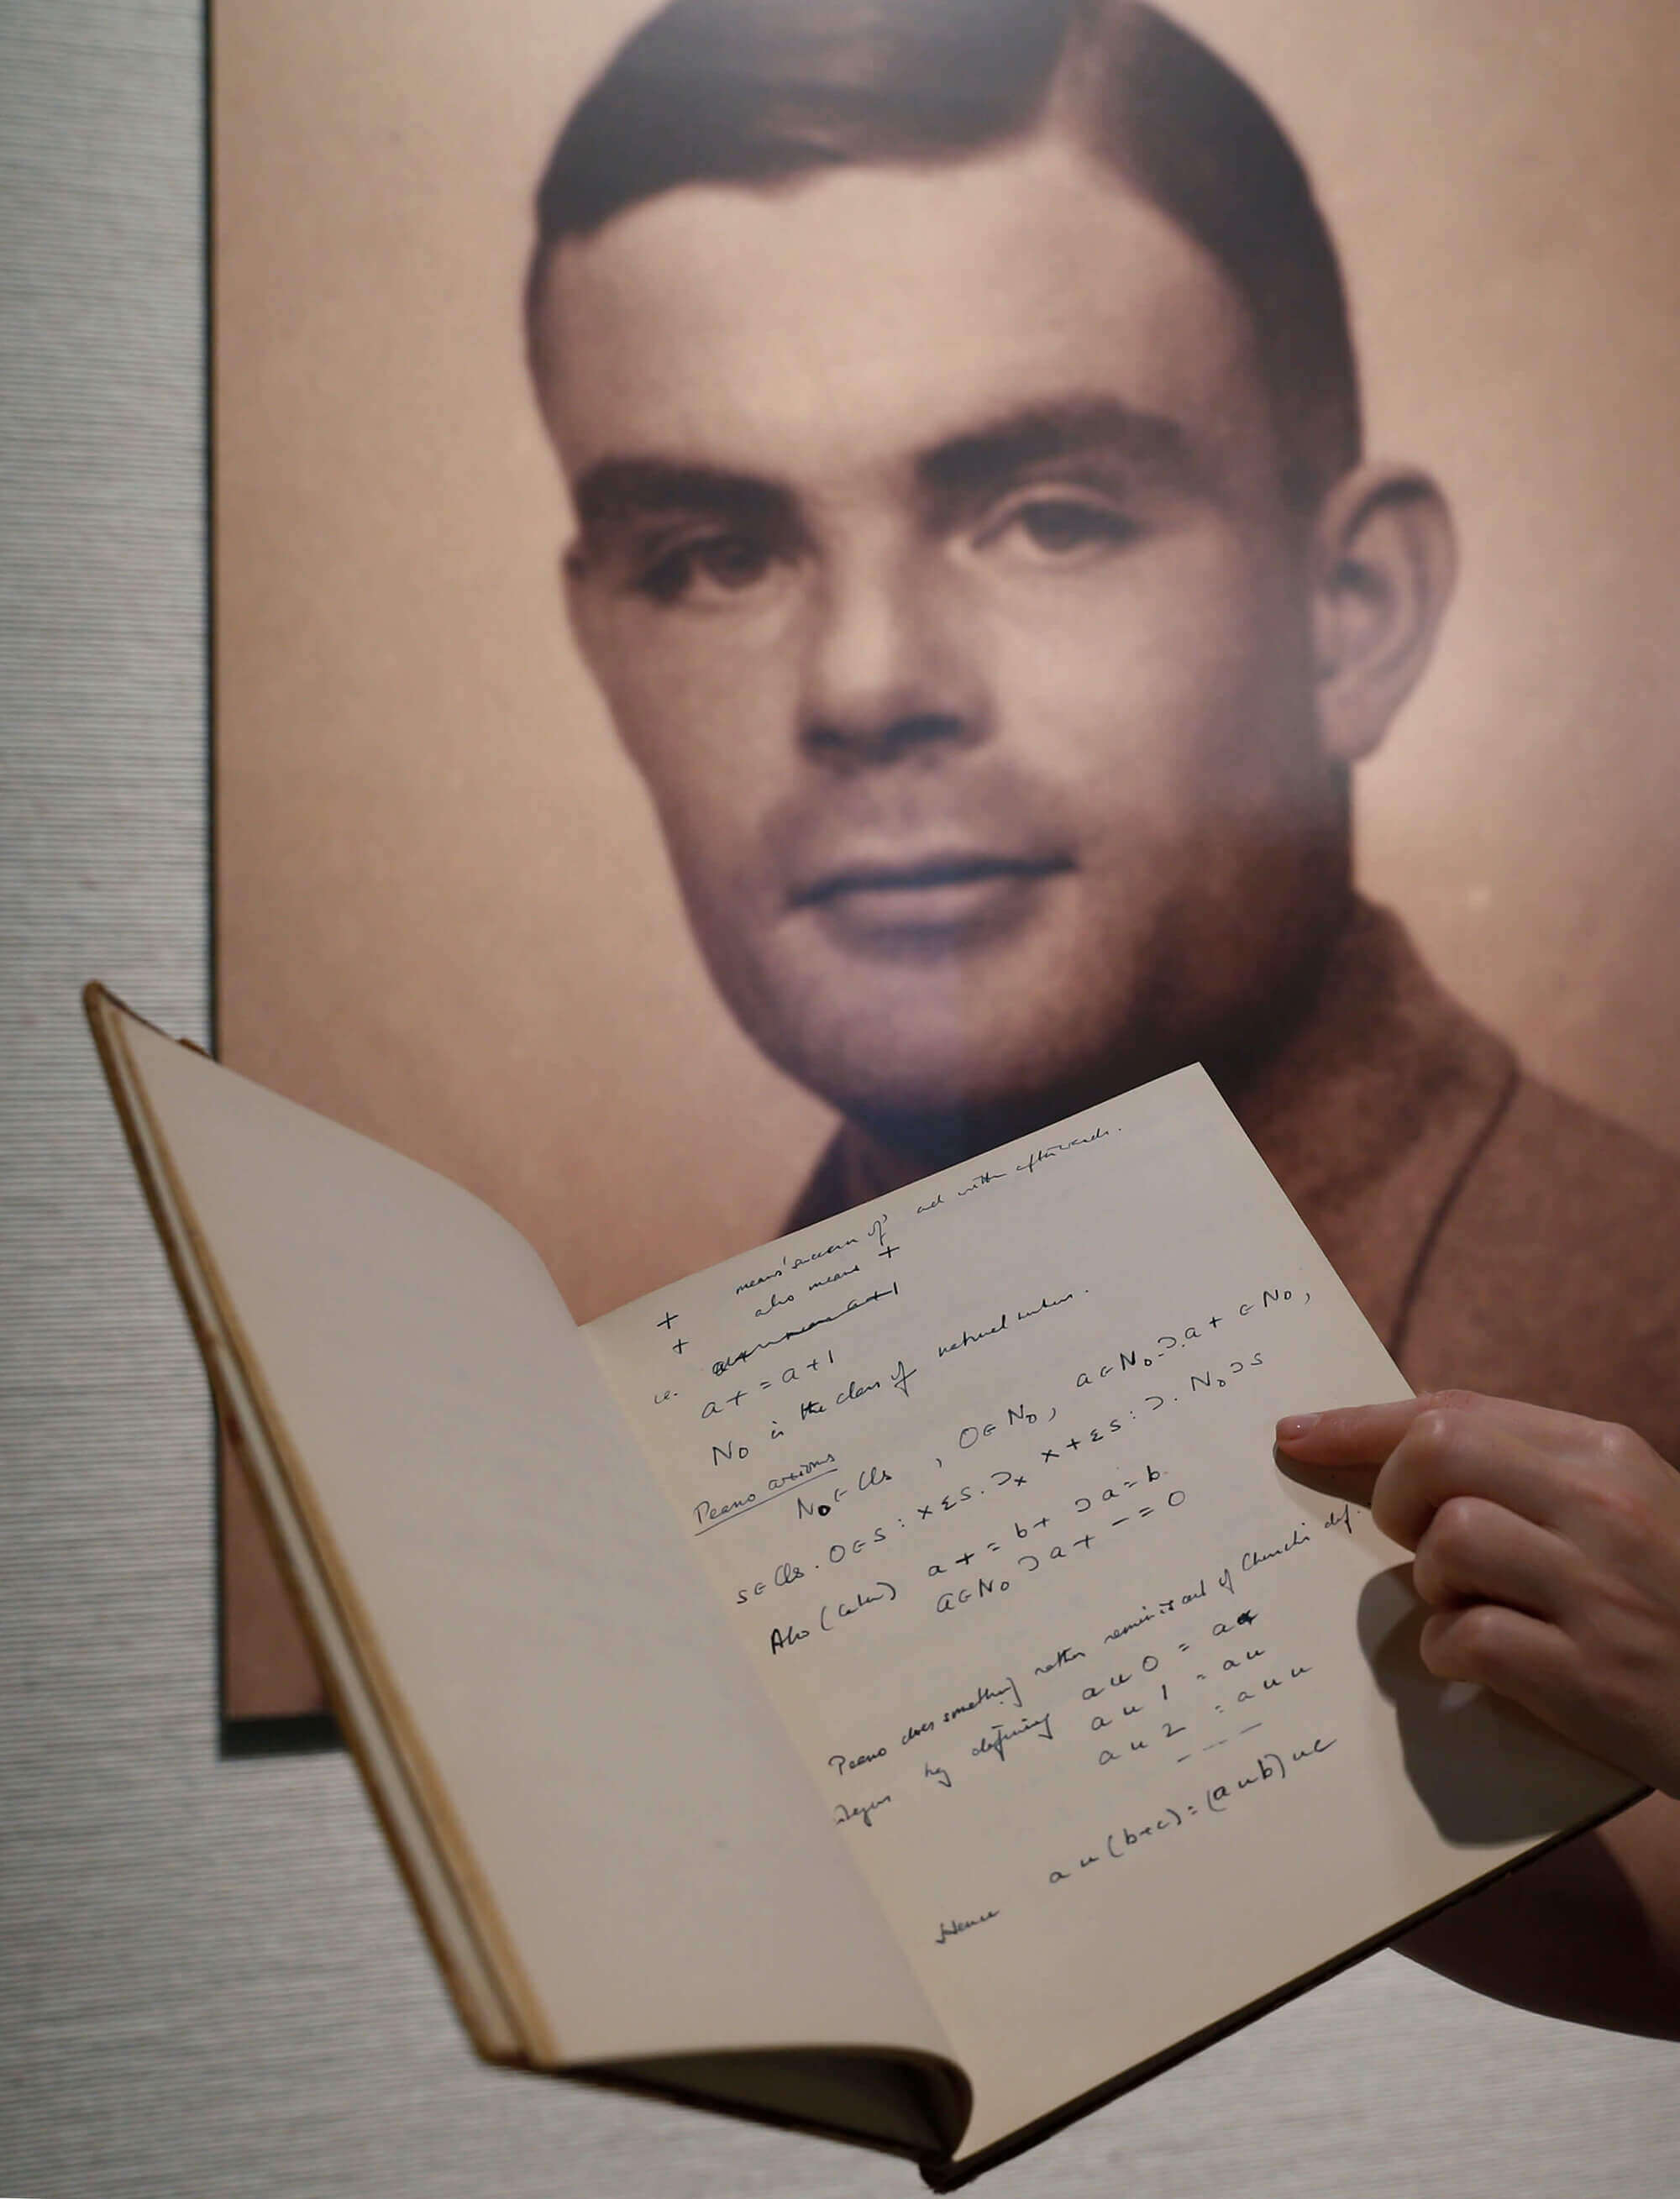 image of Alan Turing, the World War II code-breaking genius